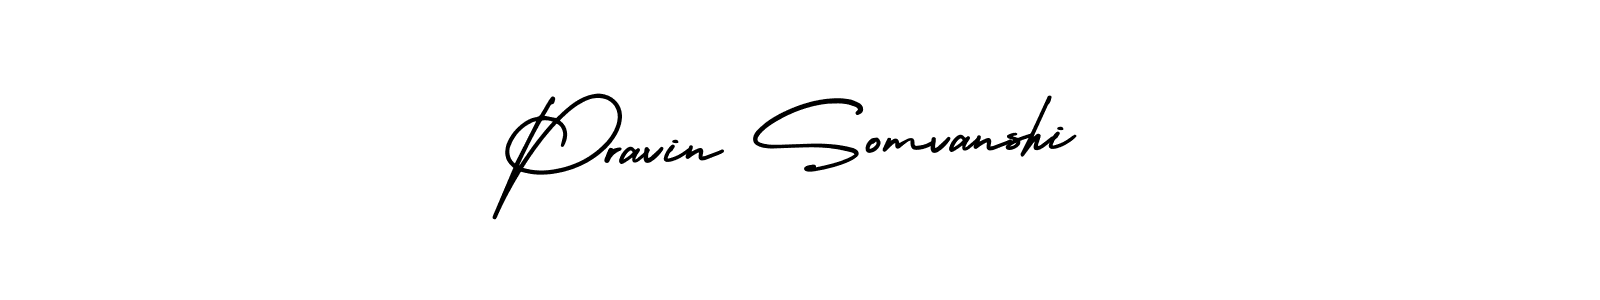 How to Draw Pravin Somvanshi signature style? AmerikaSignatureDemo-Regular is a latest design signature styles for name Pravin Somvanshi. Pravin Somvanshi signature style 3 images and pictures png